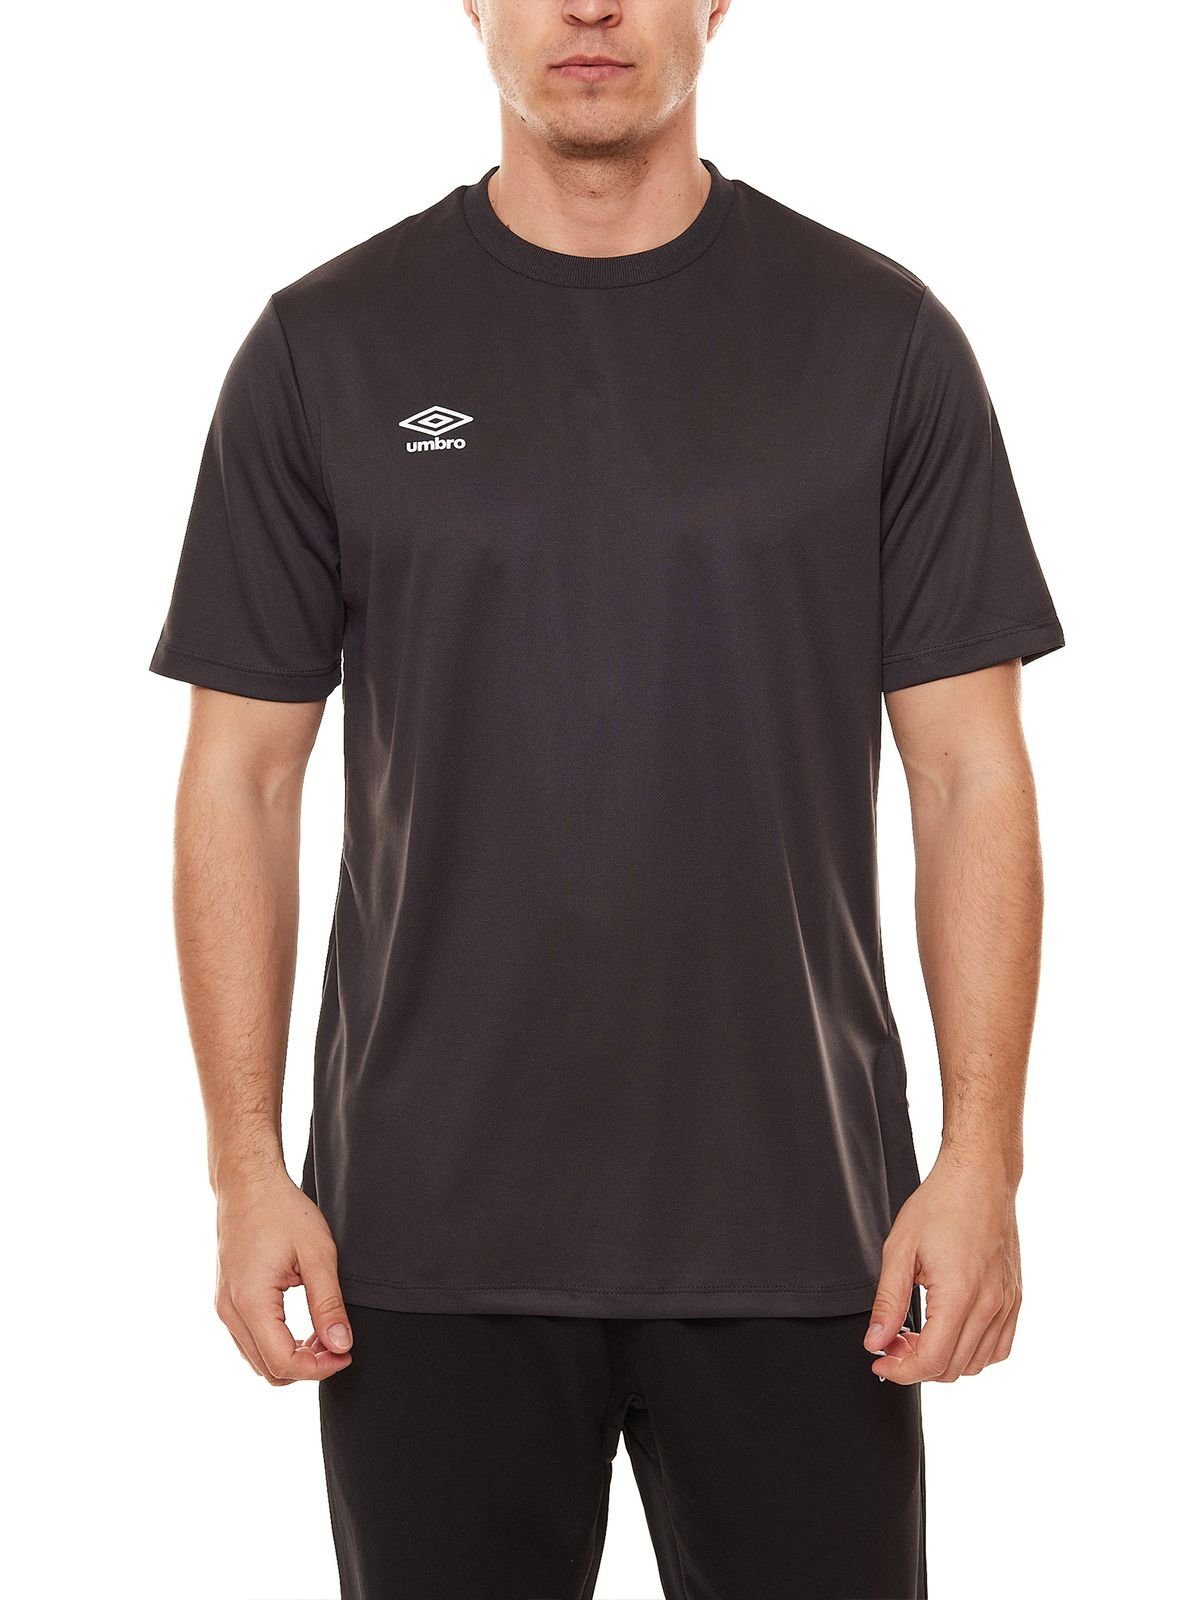 Umbro Funktionsshirt umbro Club Jersey Shortsleeve Herren Fußball-Shirt  Trikot 64501U-825 Trainings-Shirt Anthrazit